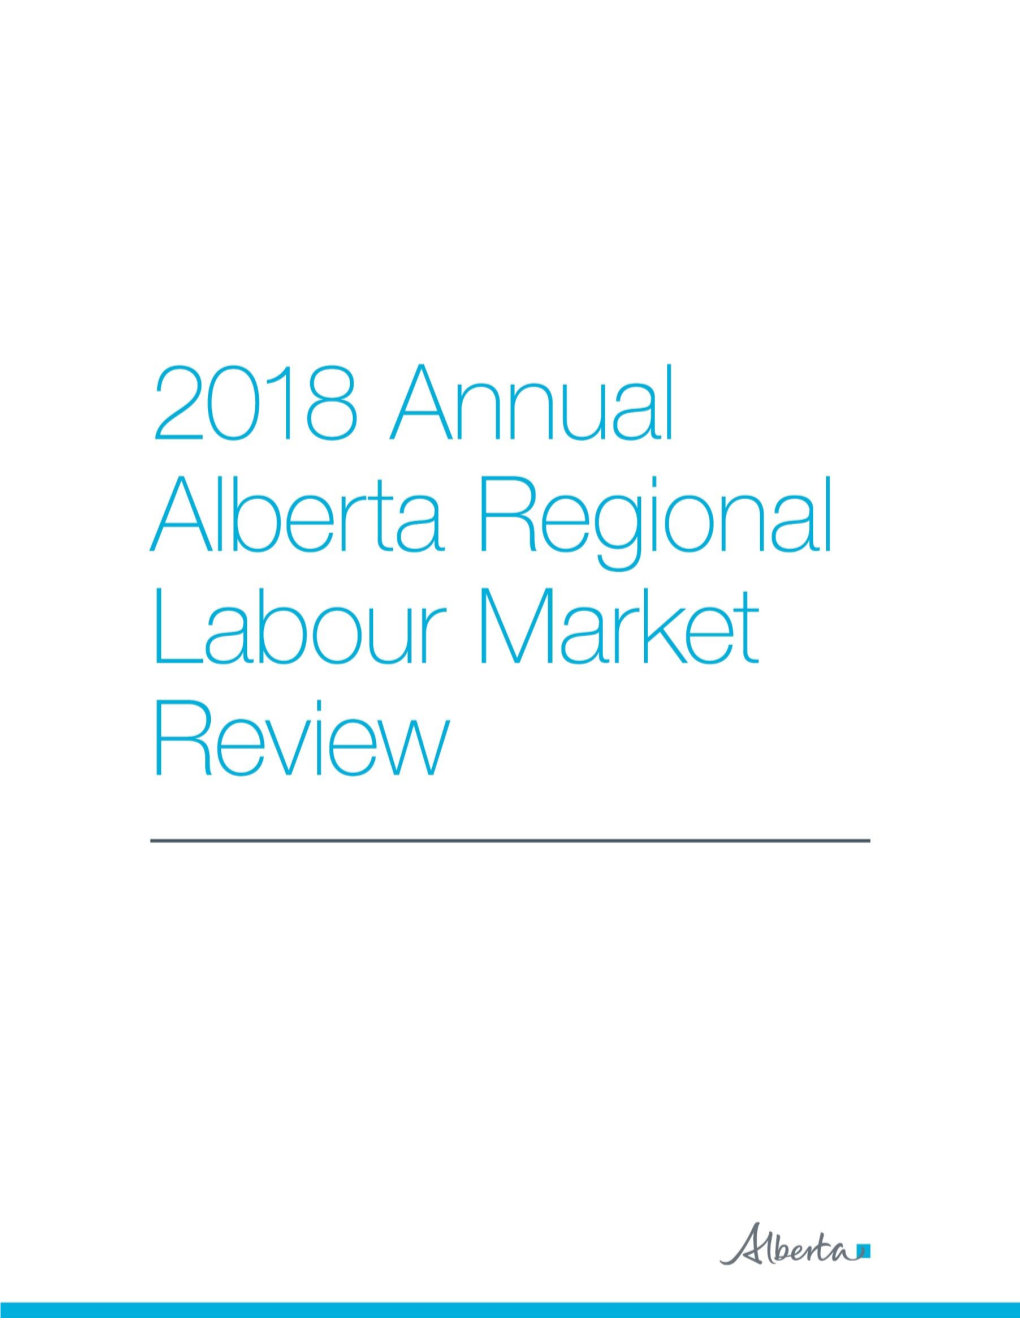 2018 Annual Alberta Regional Labour Market Review